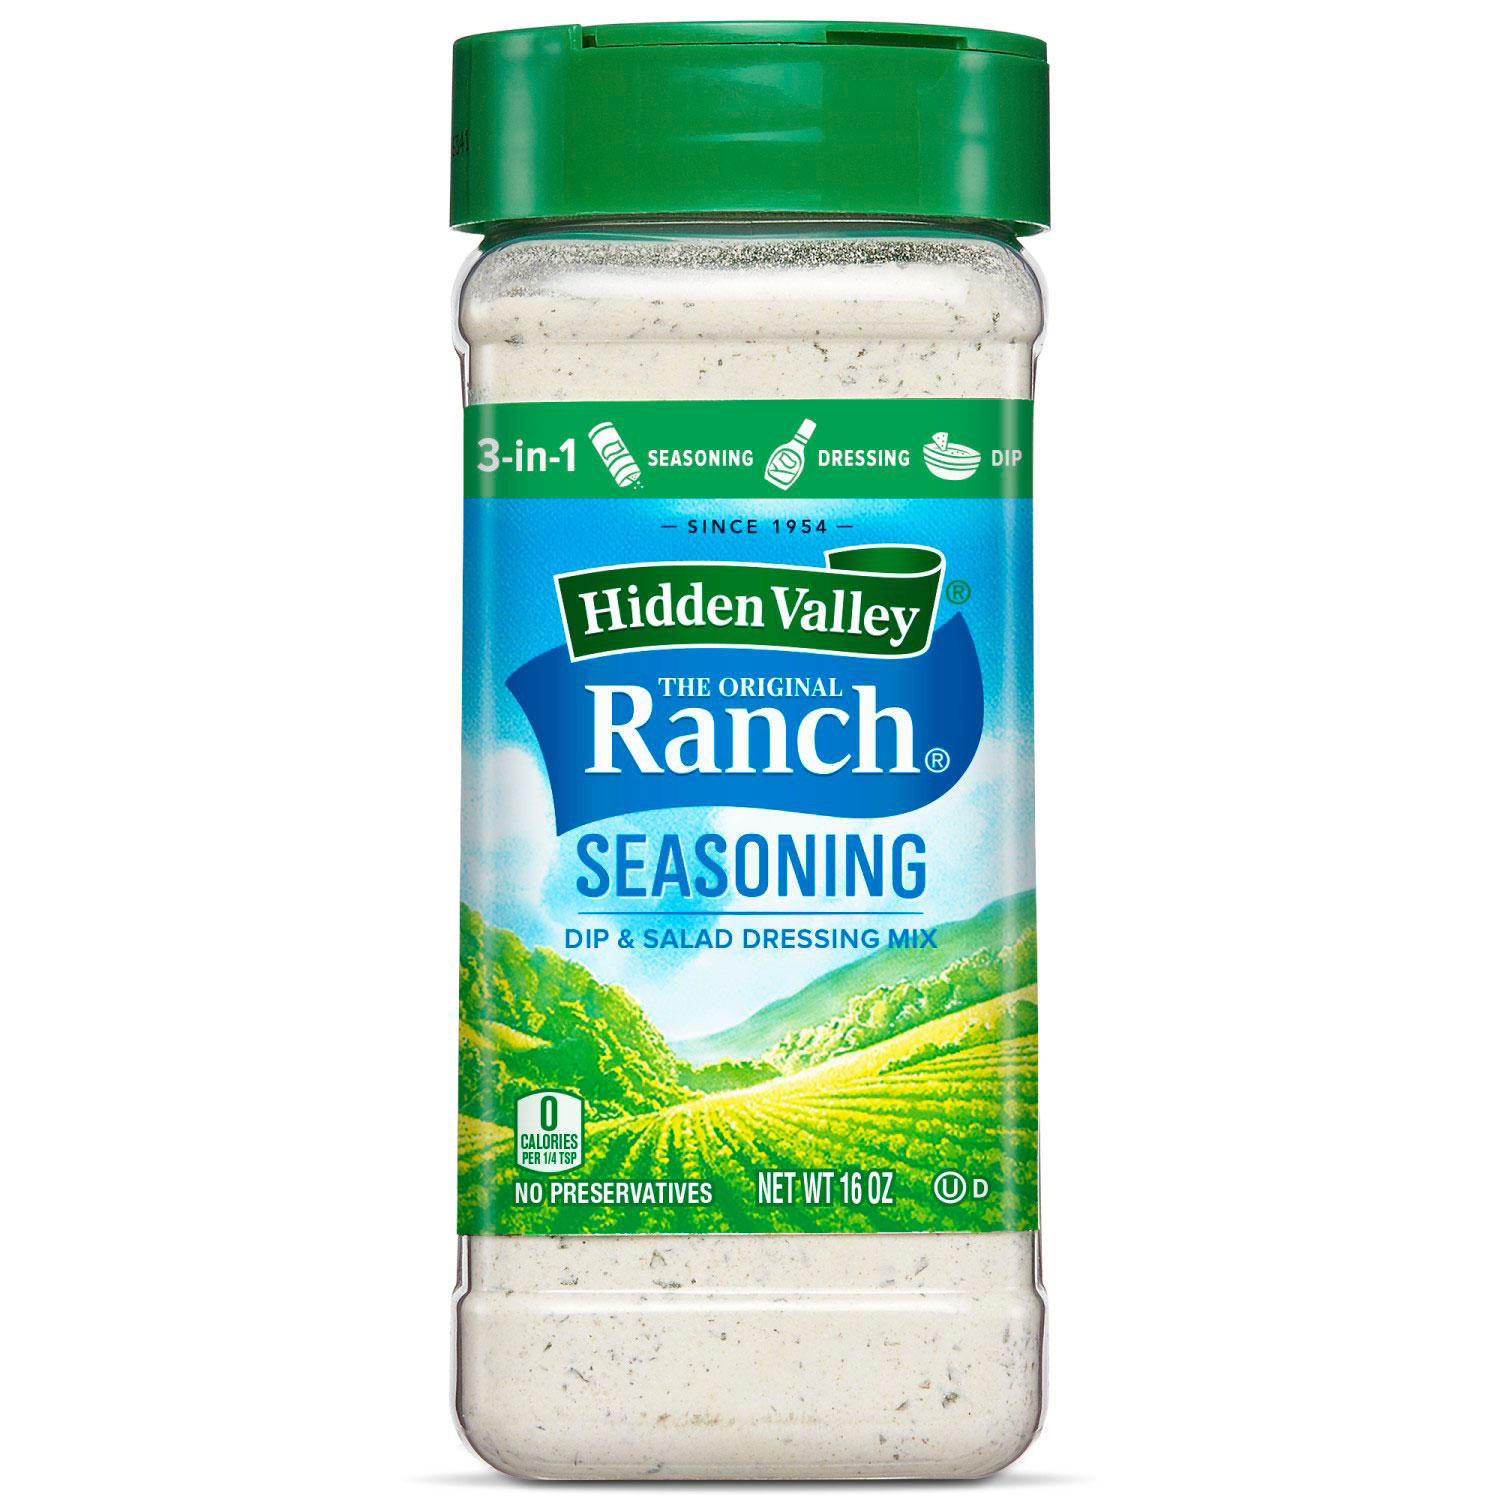 A bottle of Hidden Valley ranch seasoning